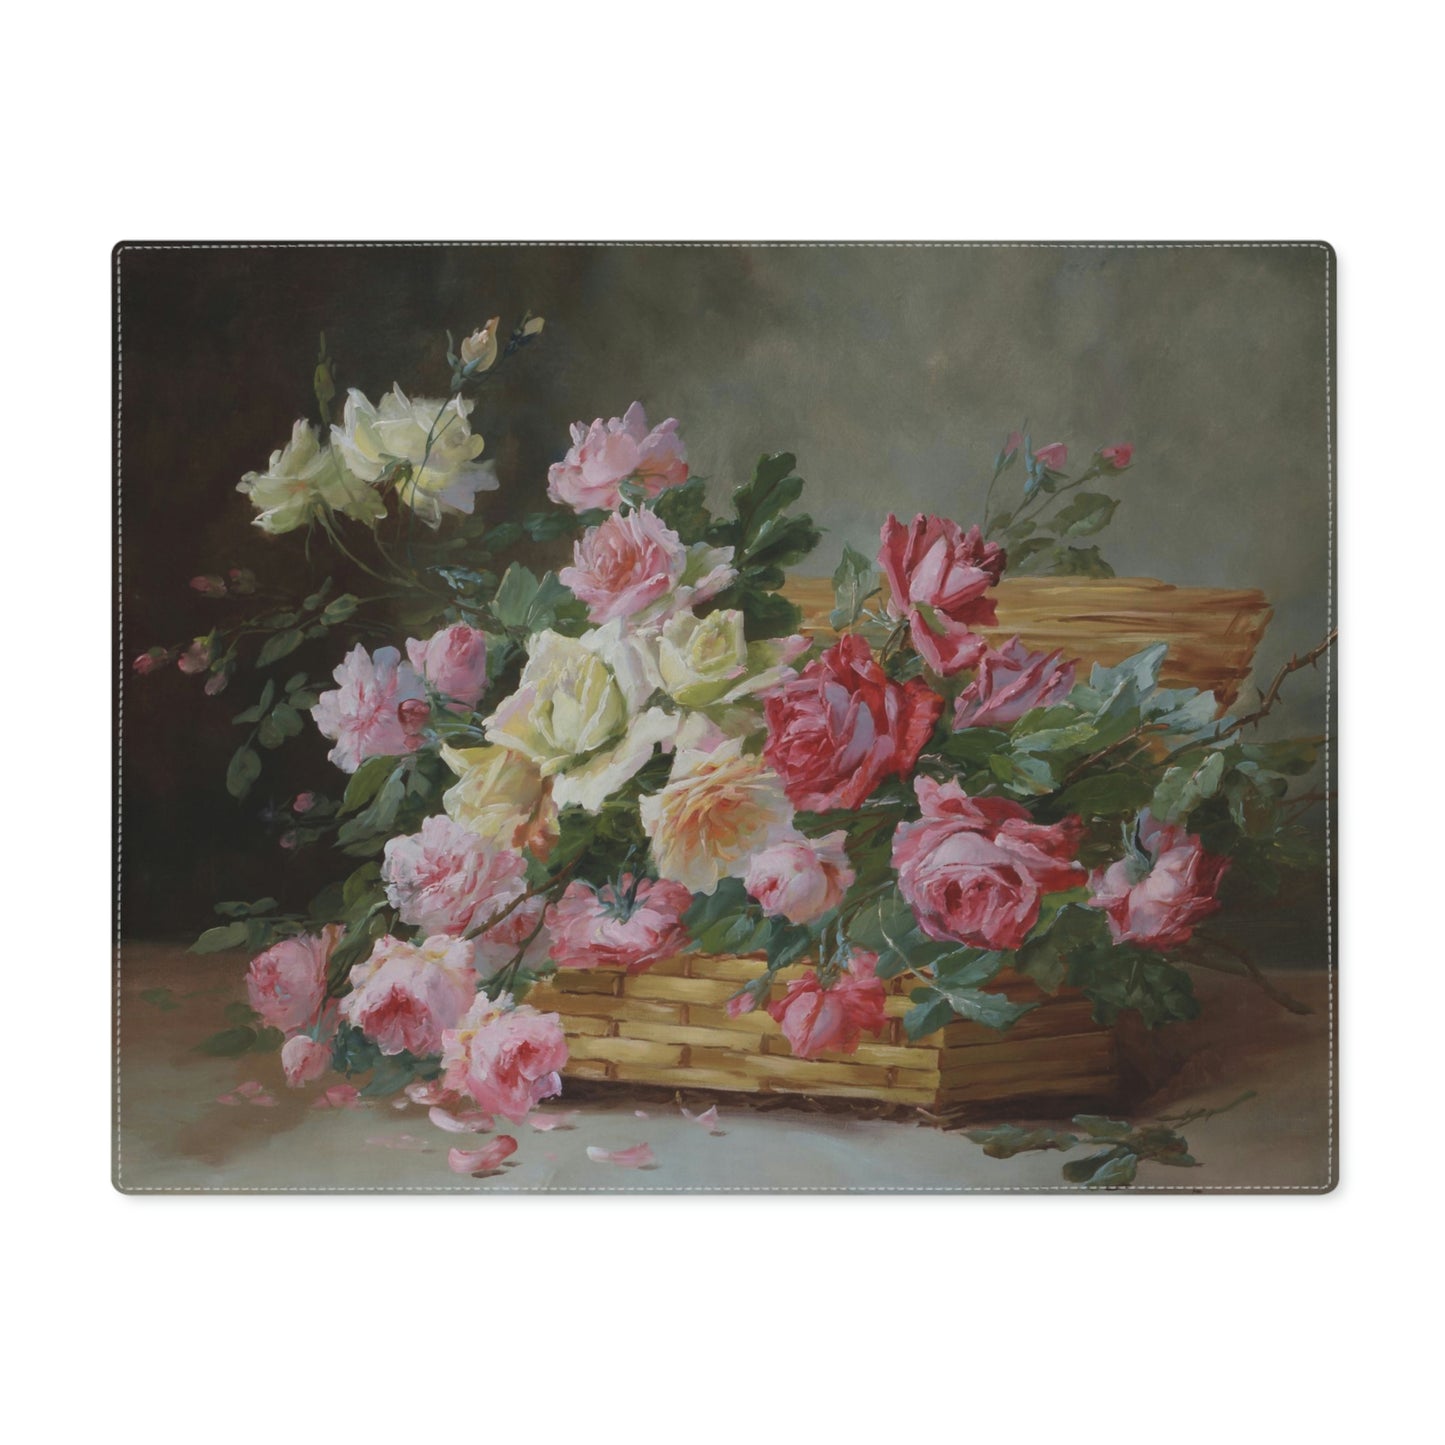 Edmond van Coppenolle: "Roses in a Basket" - Placemat, 1pc